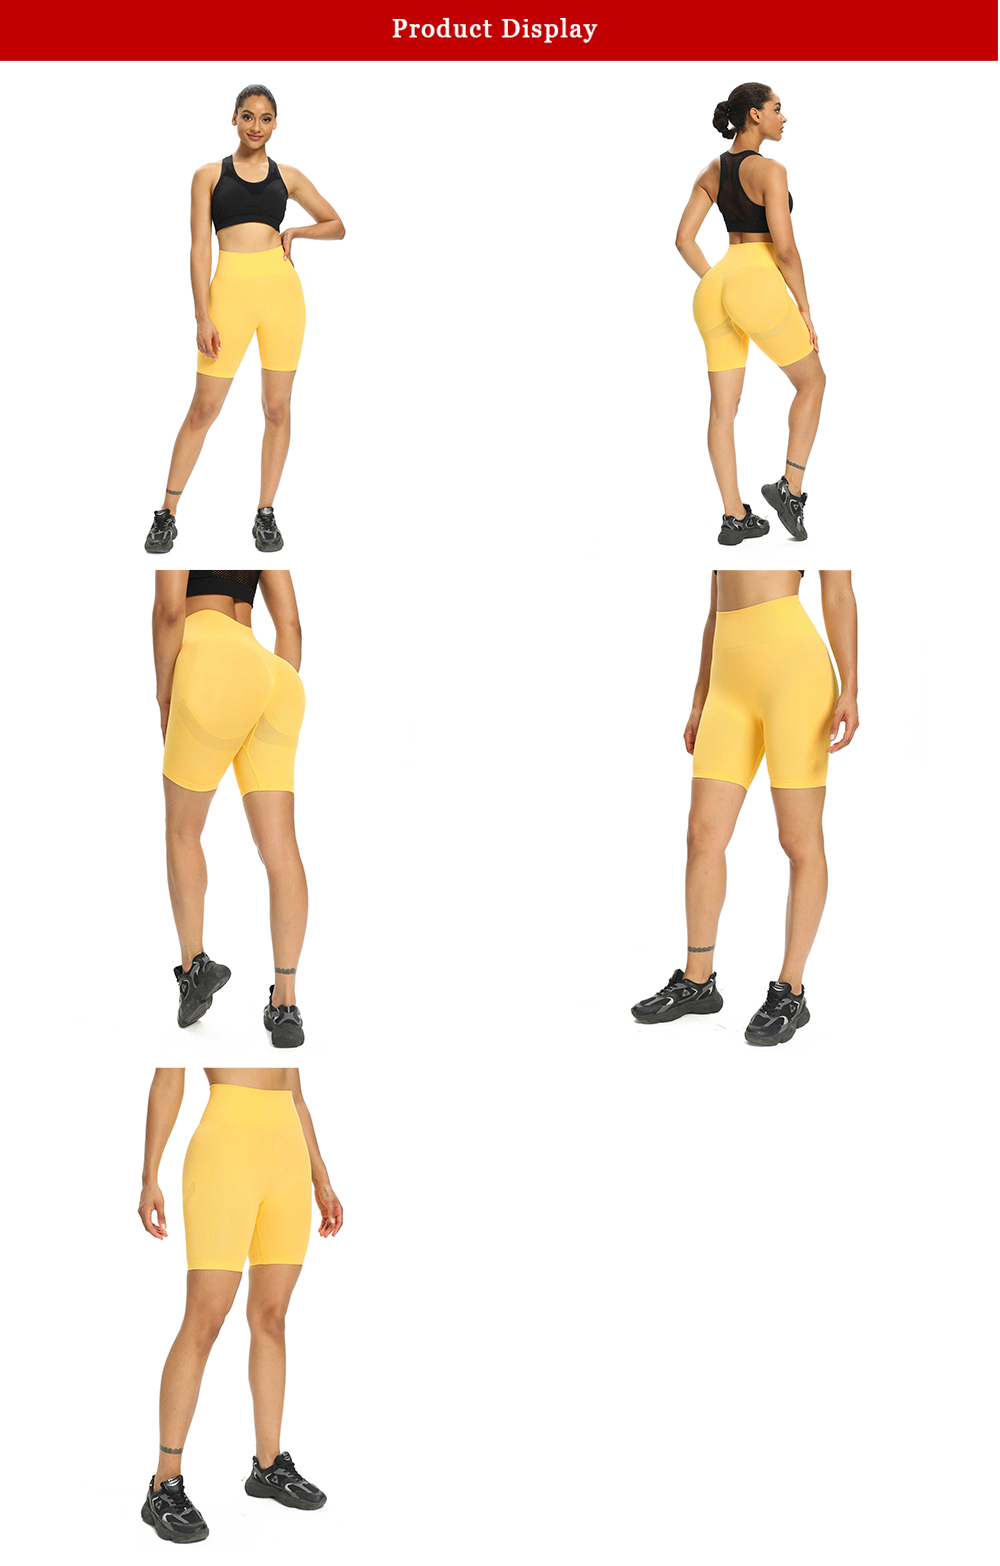 Customized yellow sport short